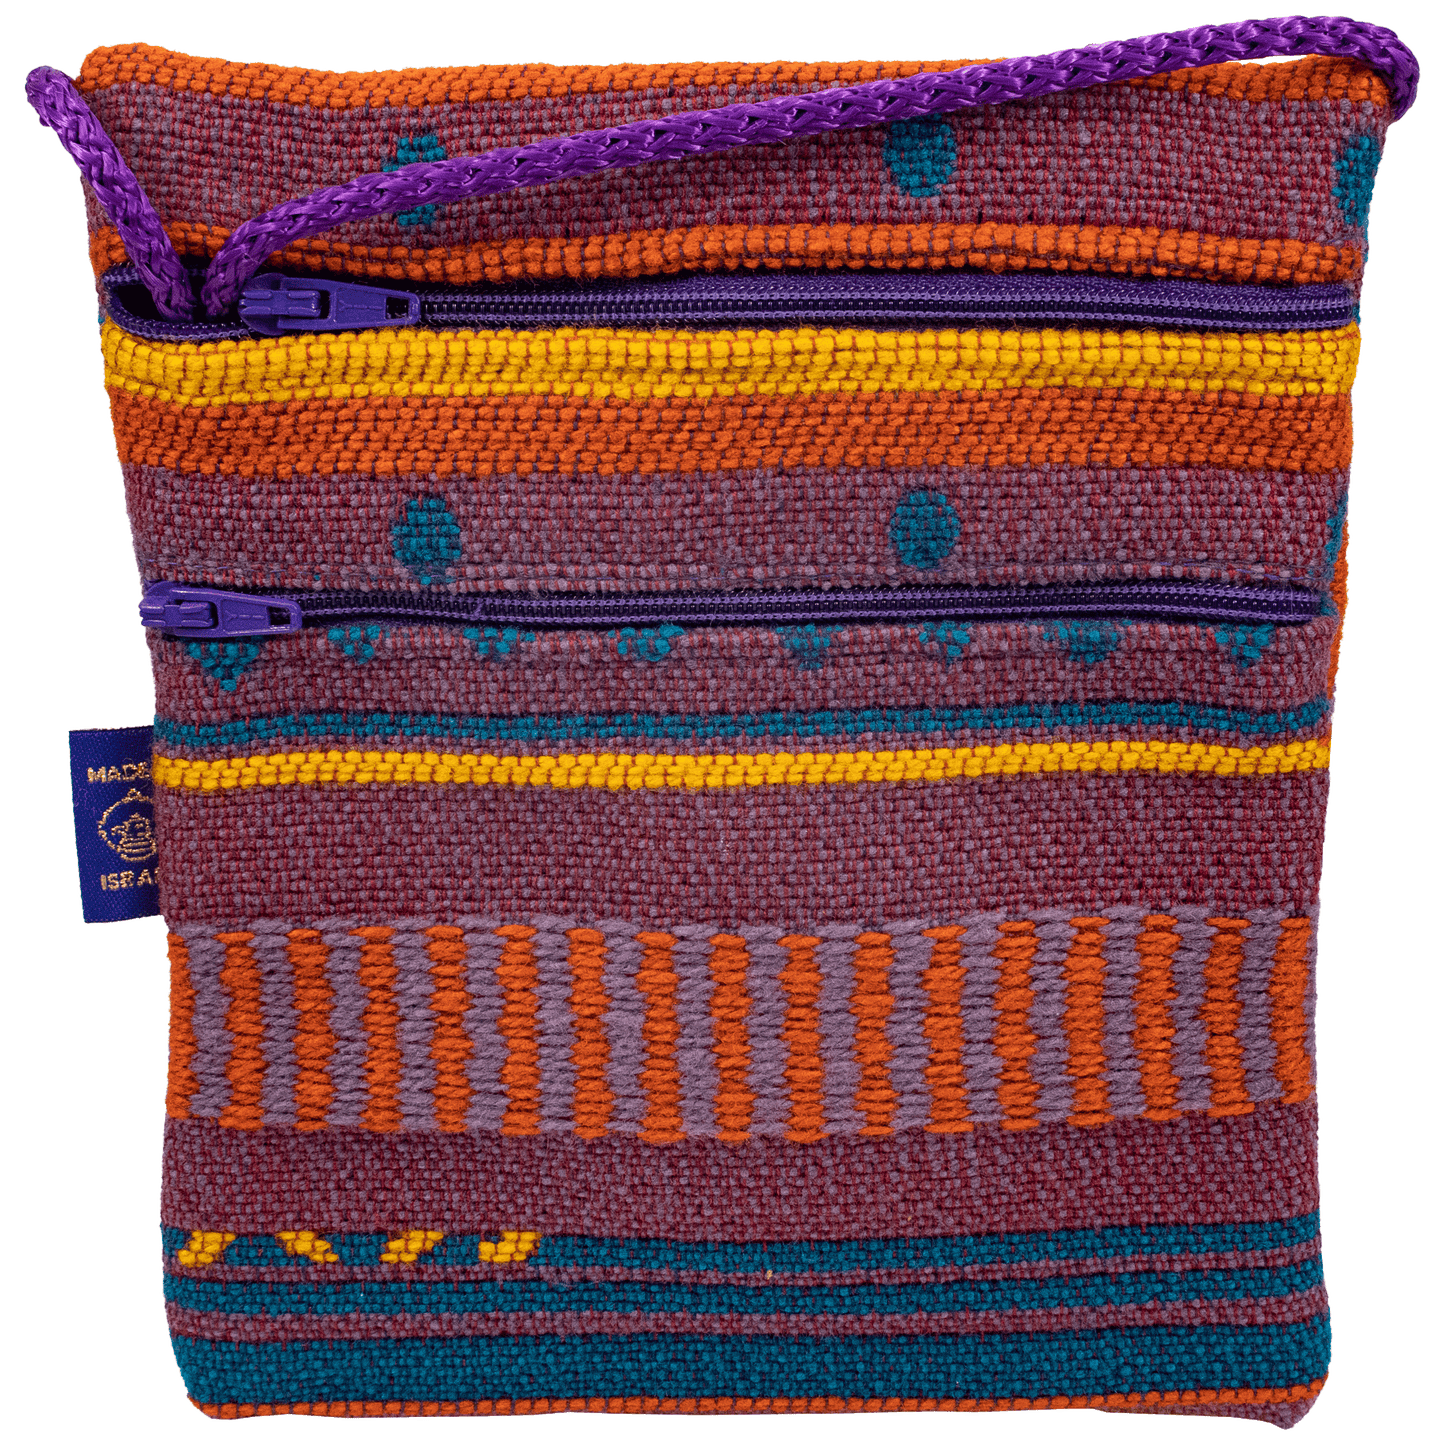 Crossbody purse desert sunset colored pattern